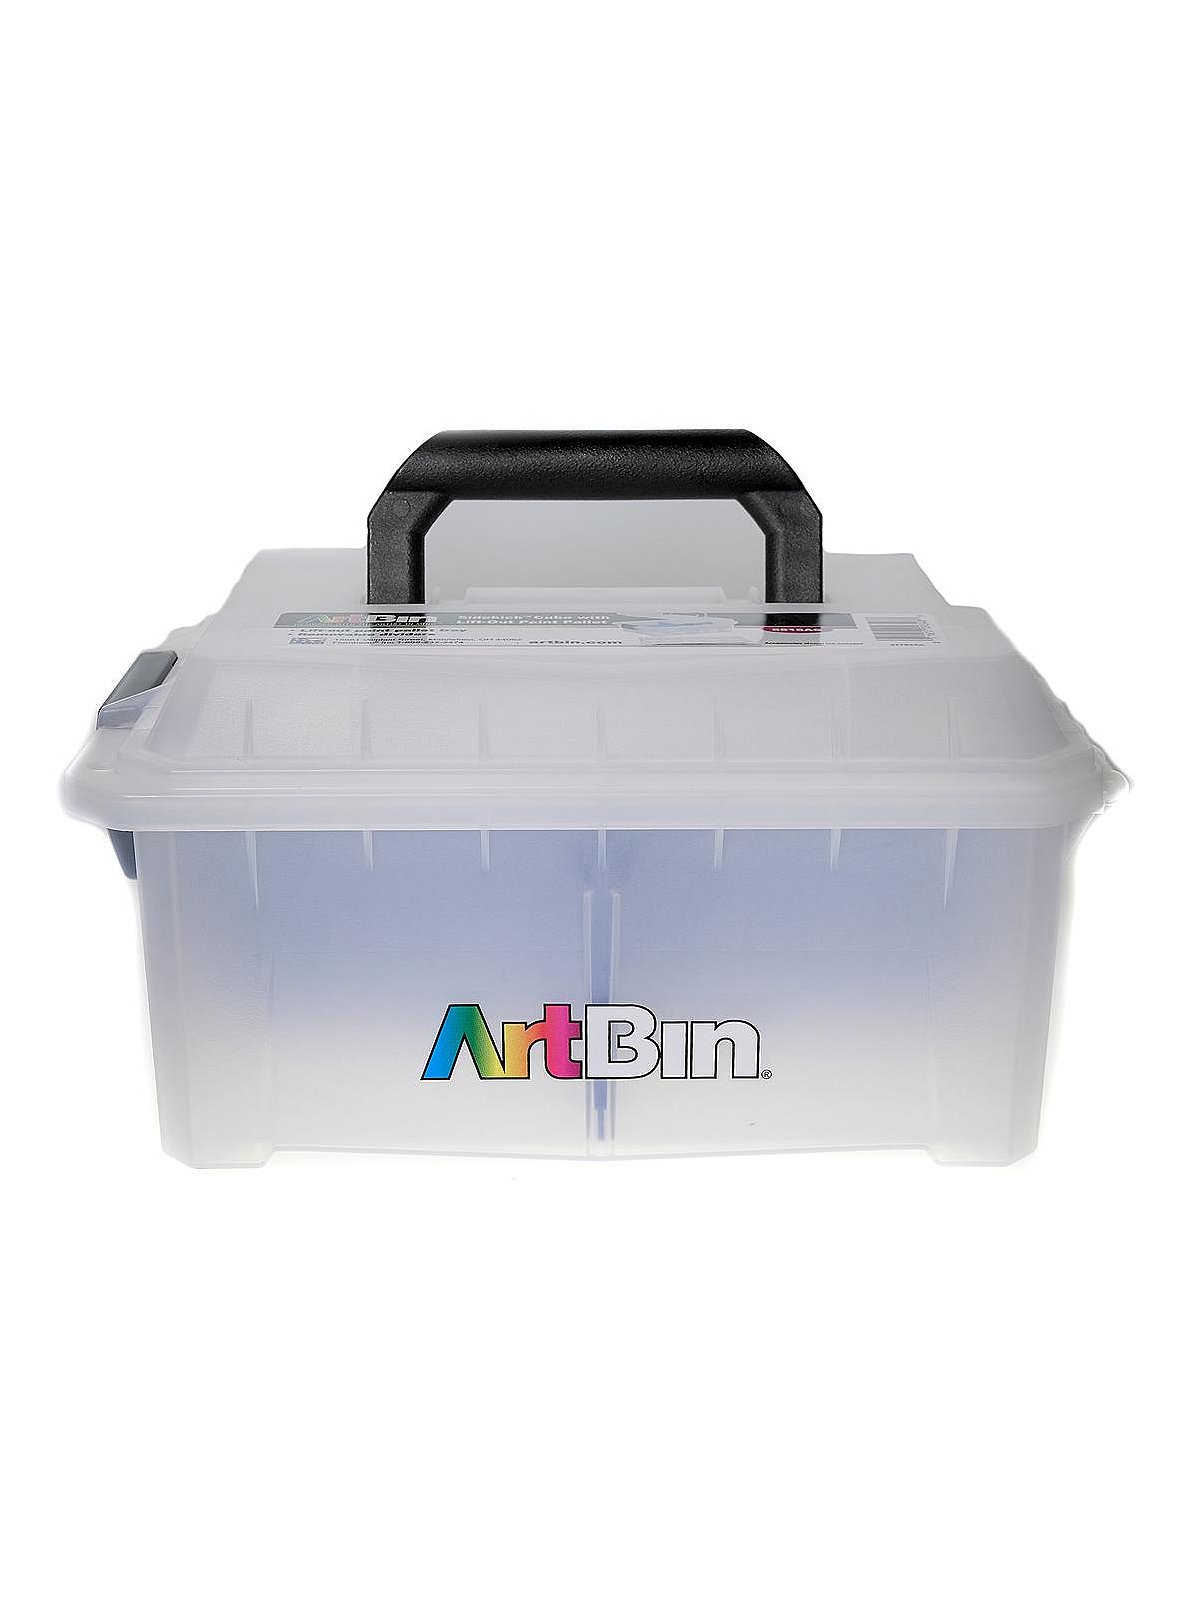 ArtBin Clear Storage Bins with Lids